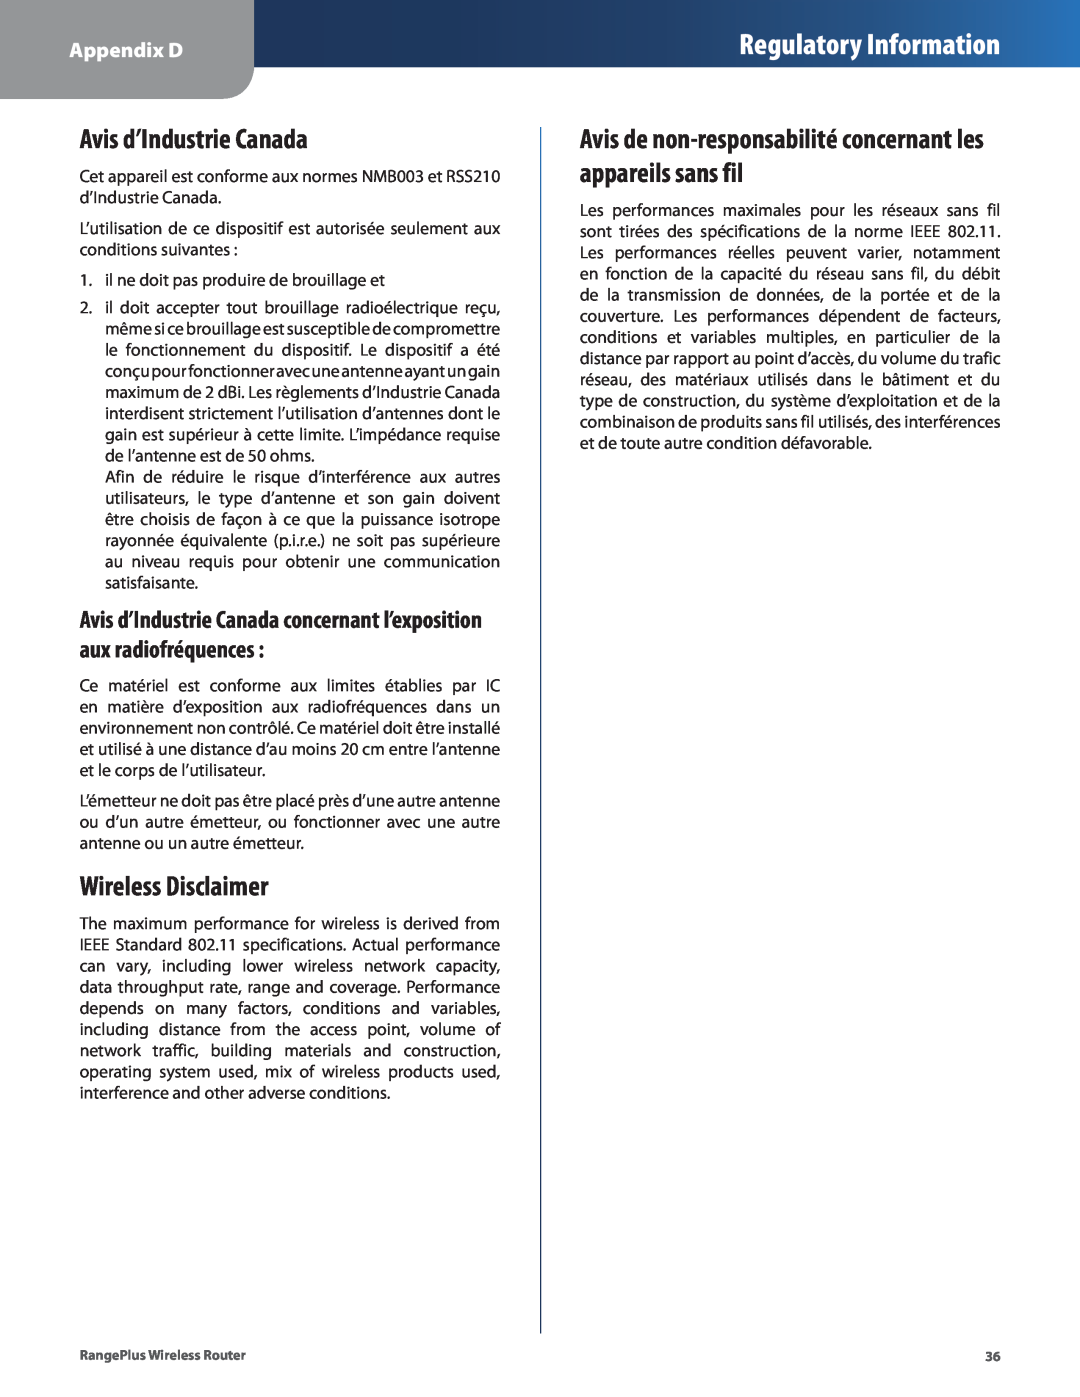 Cisco Systems WRT110 manual Avis d’Industrie Canada, Wireless Disclaimer, Regulatory Information, Appendix D 